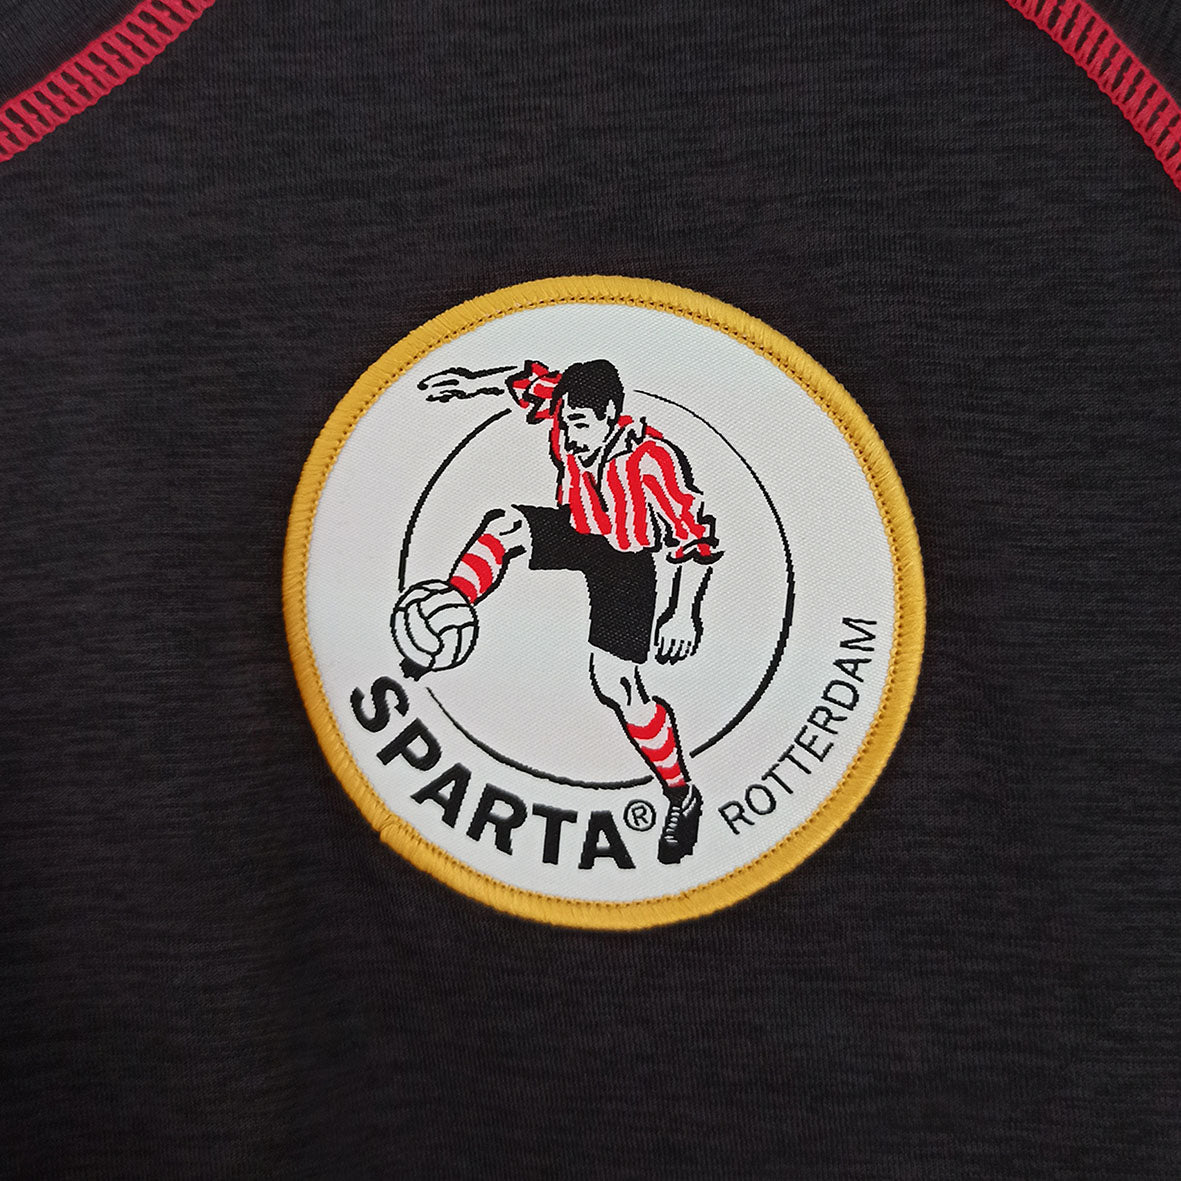 Sparta Rotterdam 2019/20